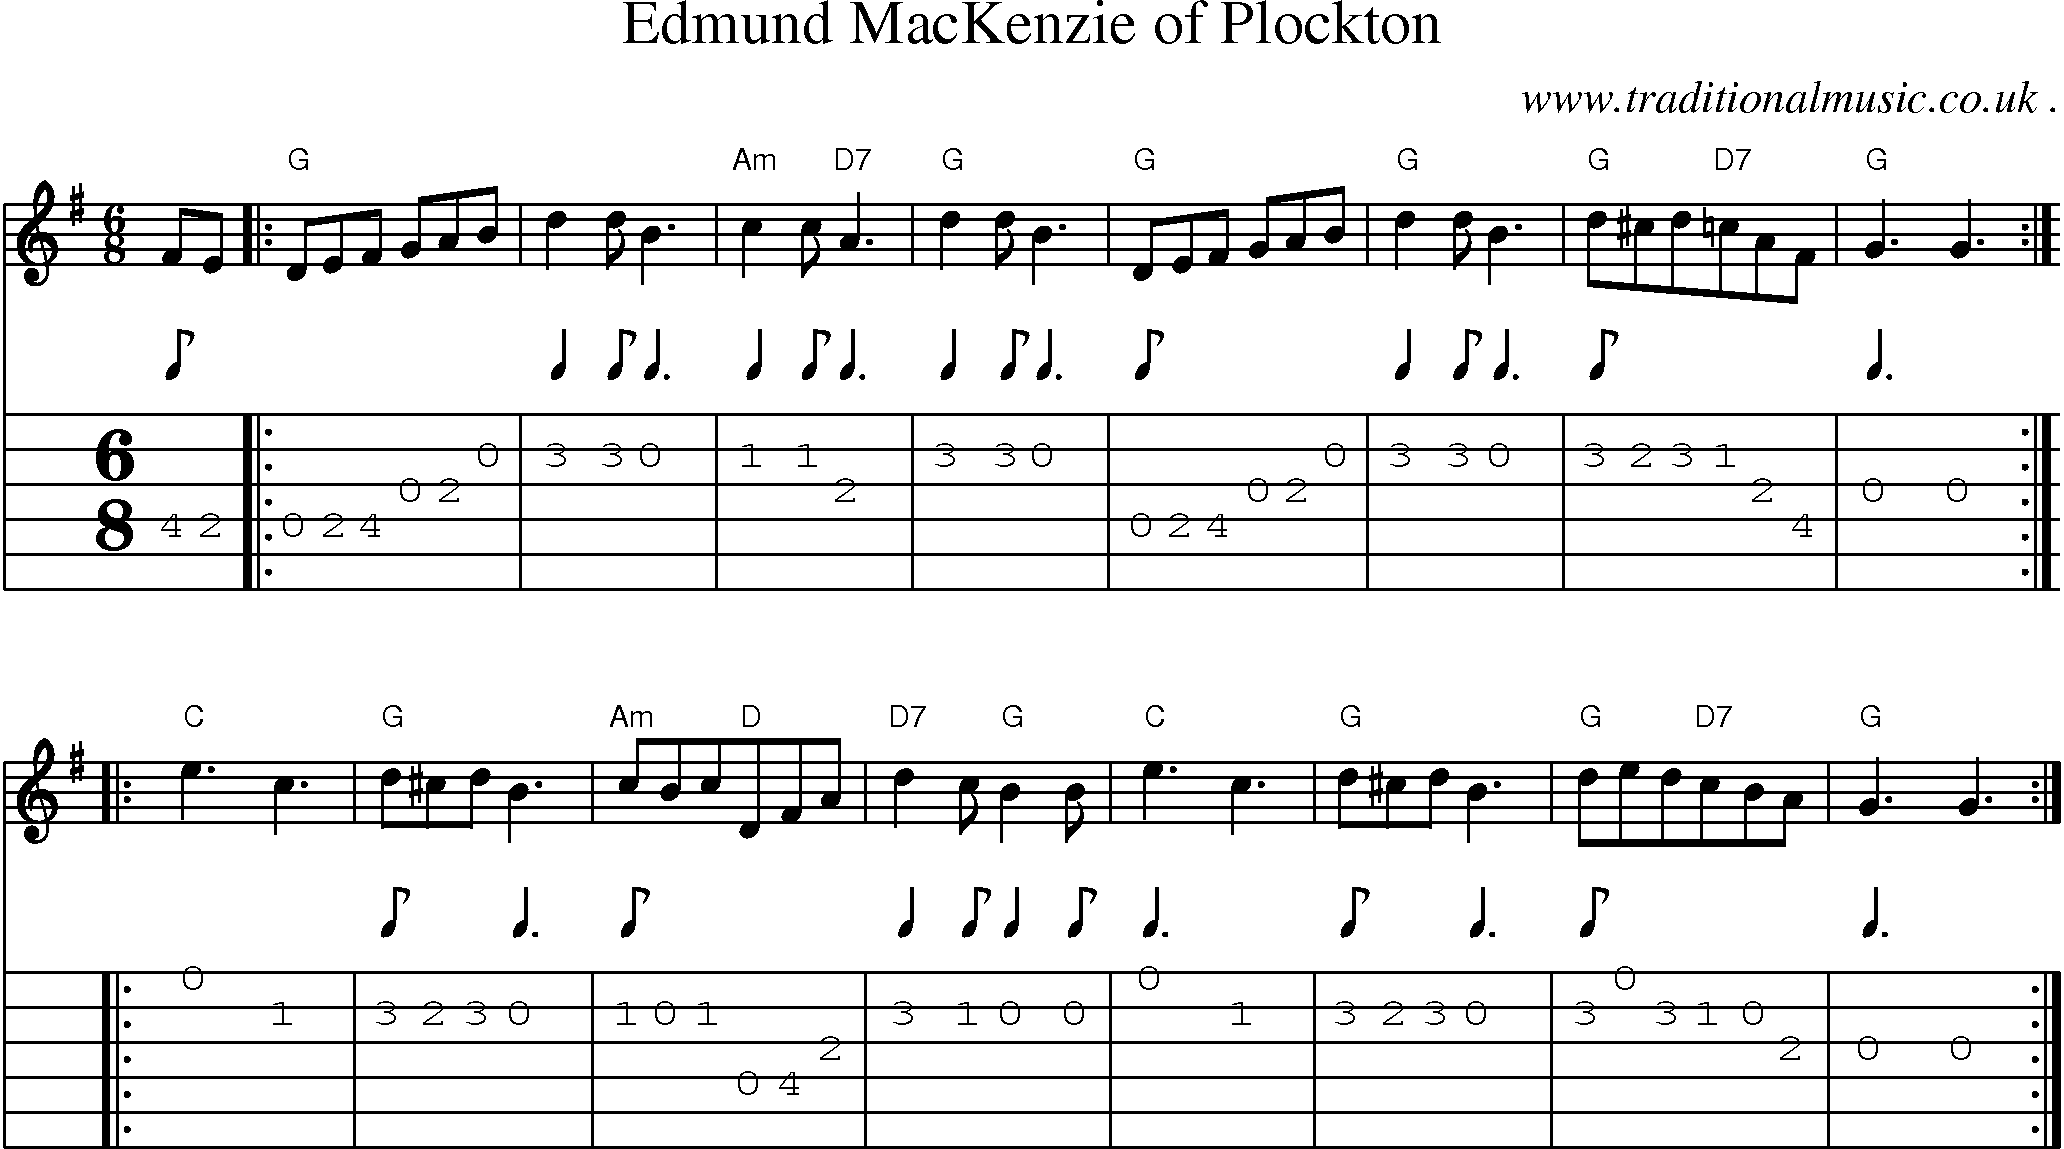 Sheet-Music and Guitar Tabs for Edmund Mackenzie Of Plockton